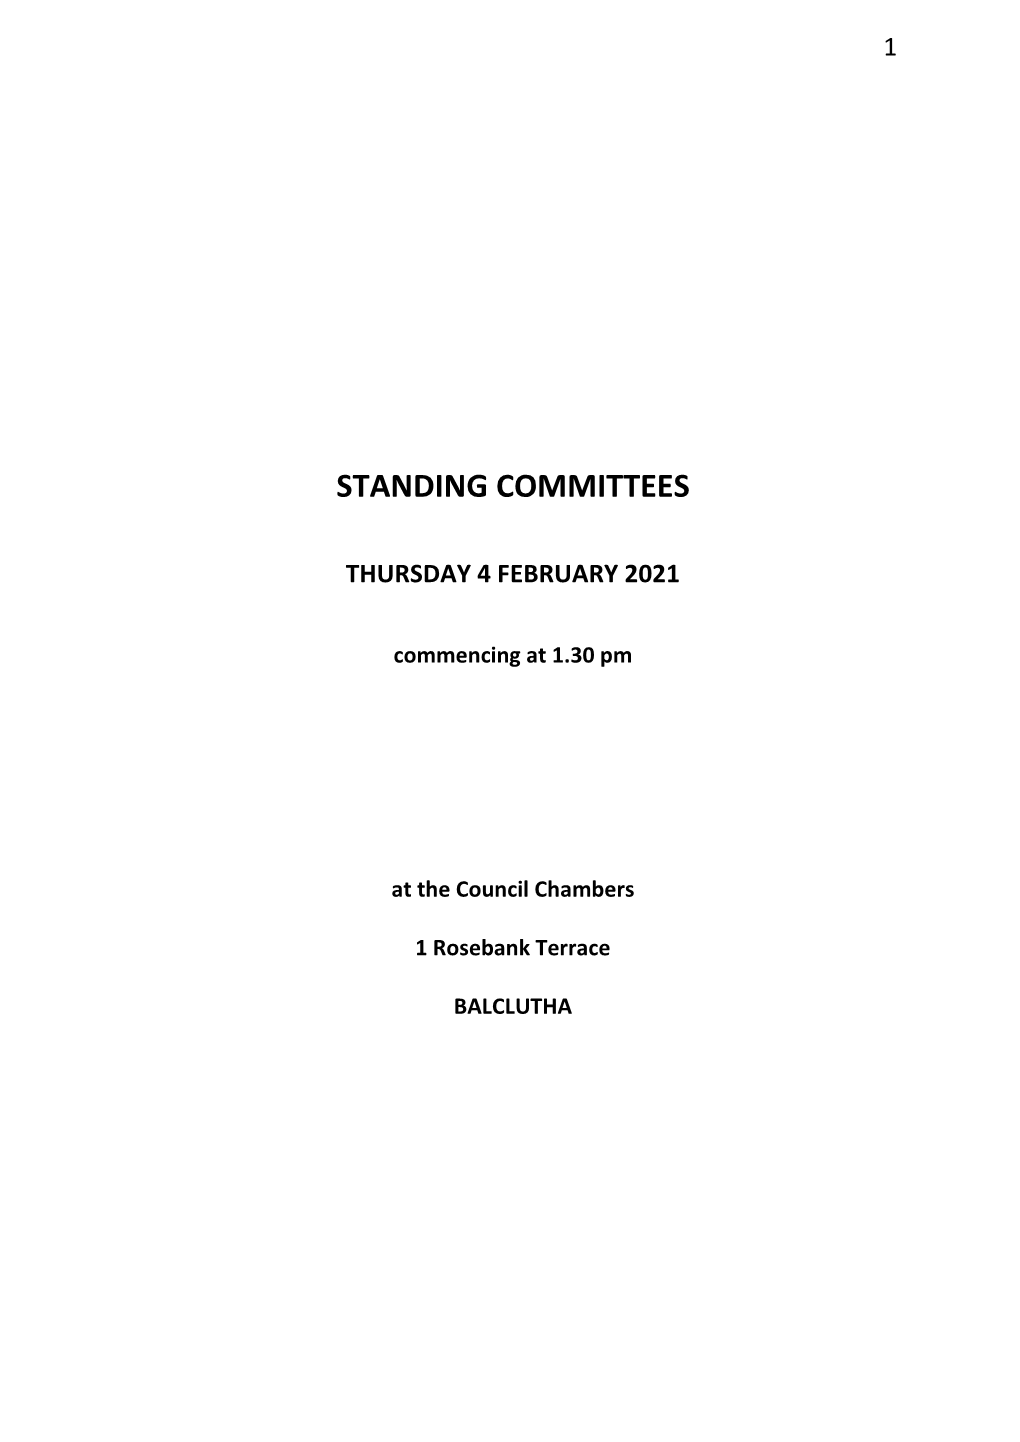 Standing Committees